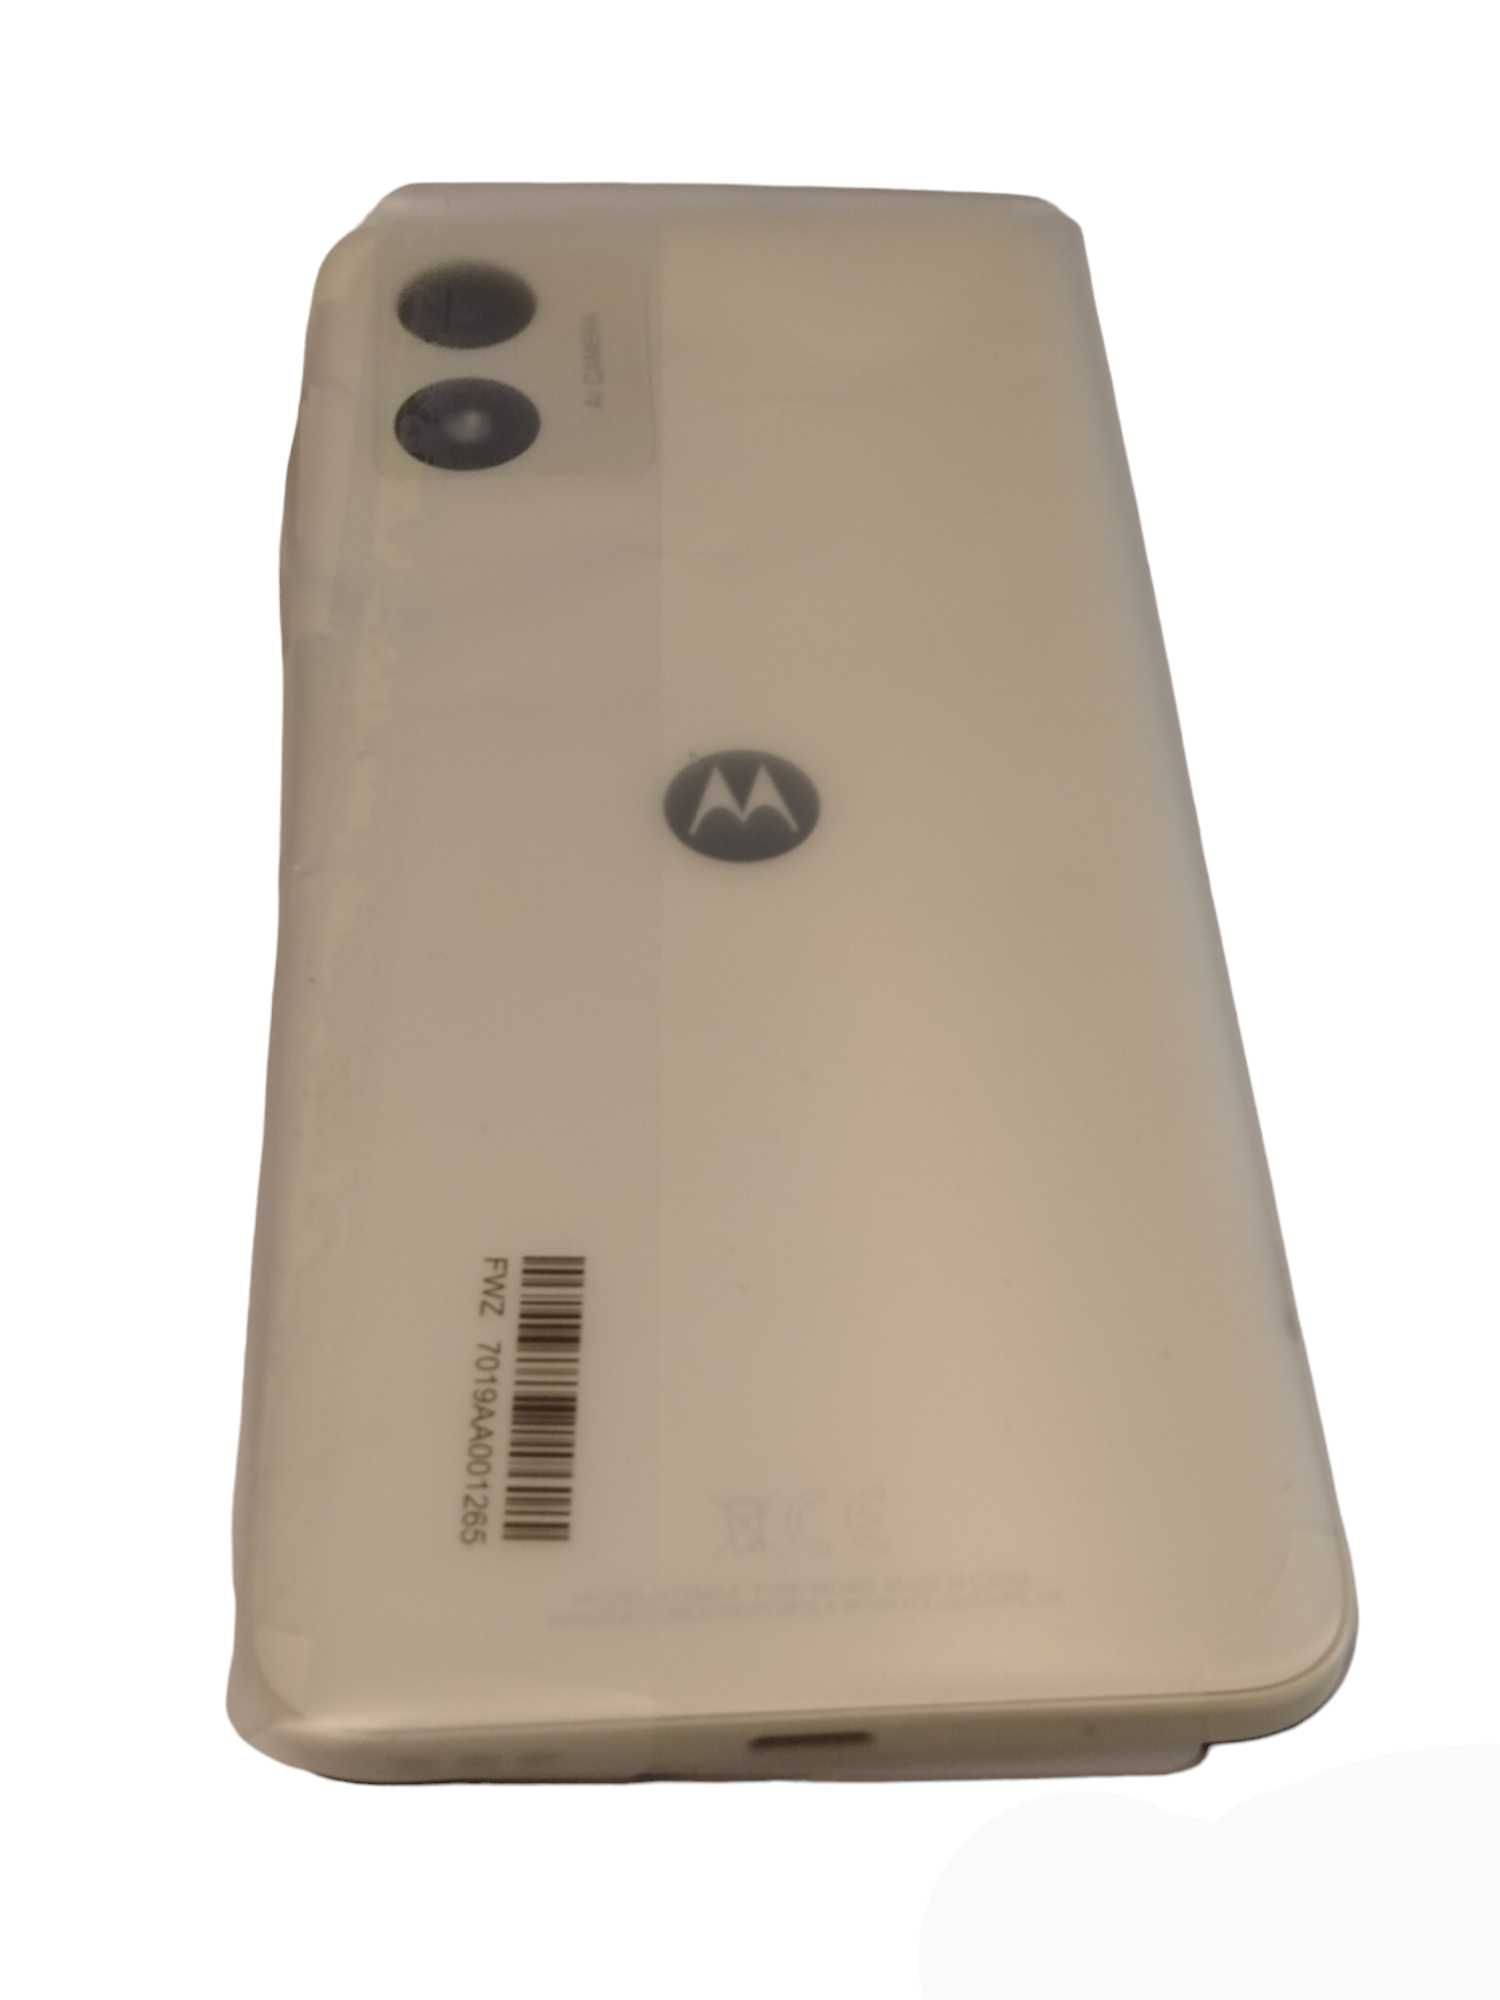 Smartfon Motorola Moto E13 Biała 64 GB / Nowy Lombard / Częstochowa